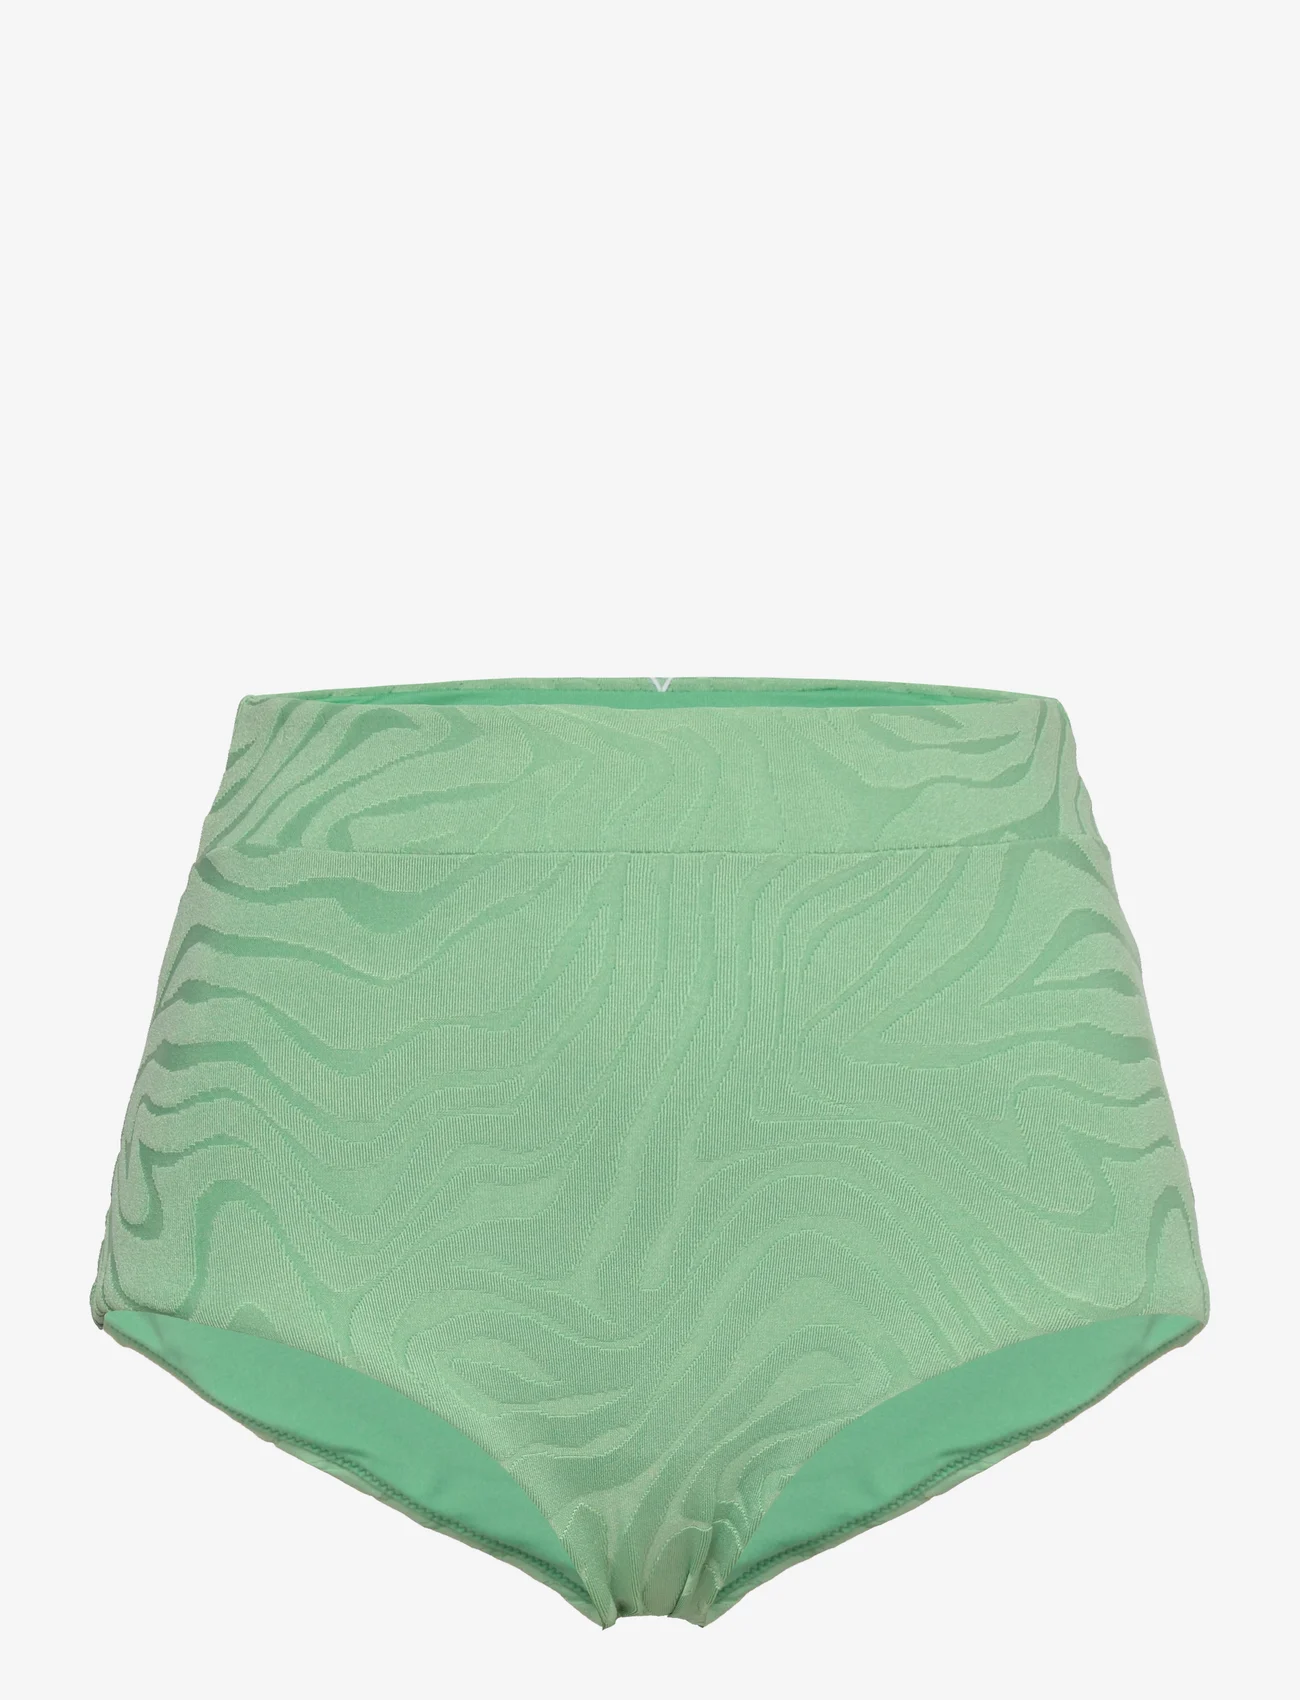 Seafolly - Second Wave High Waisted Pant - bikinitrosor med hög midja - palm green - 0